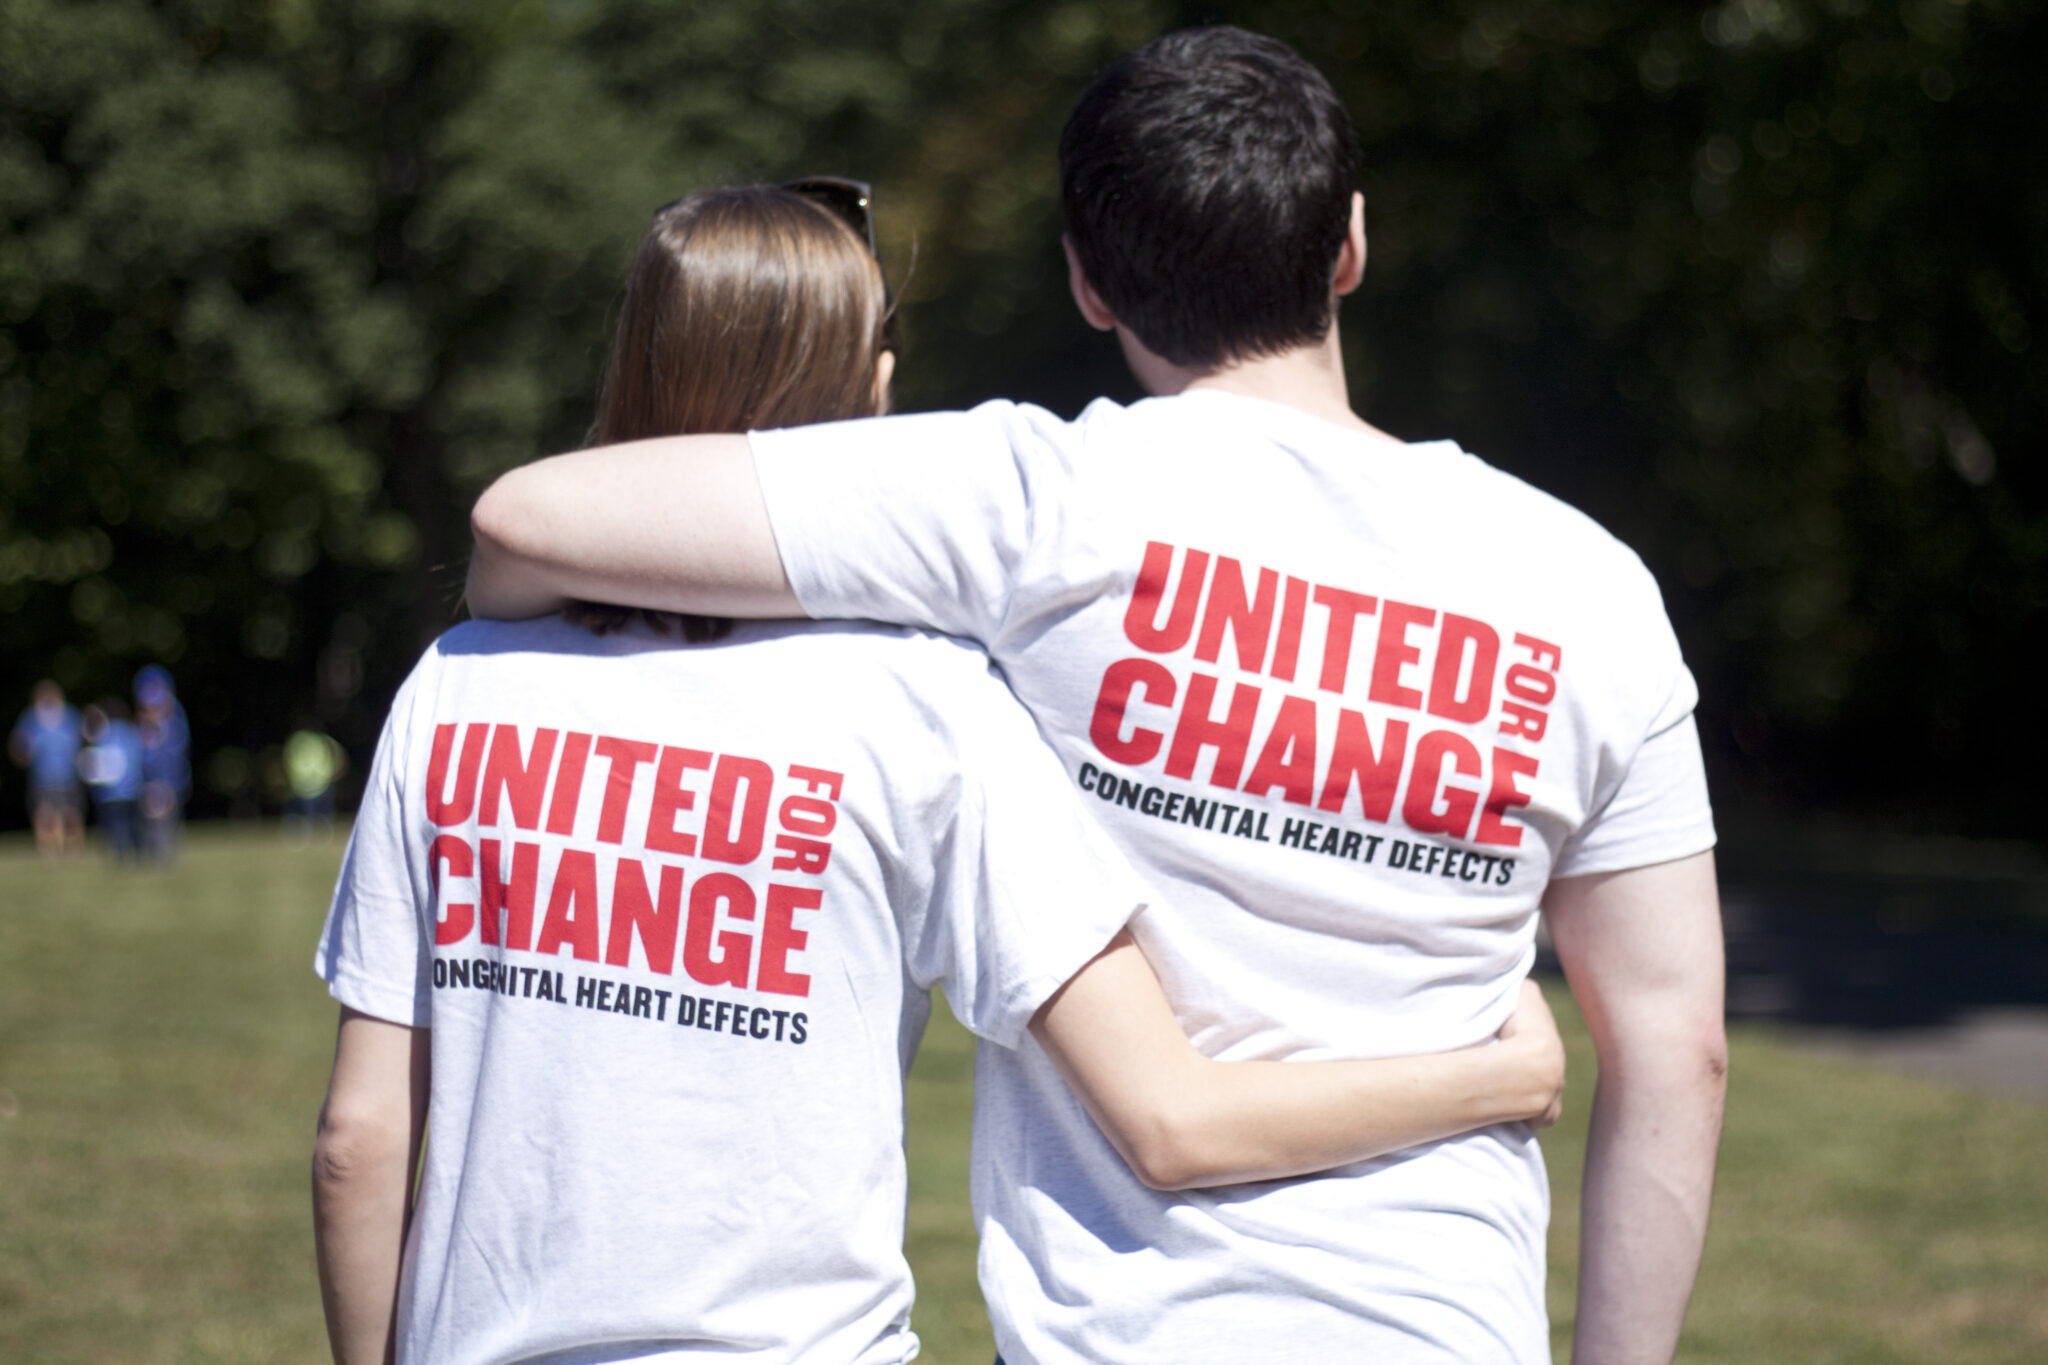 United for Change T-shirt